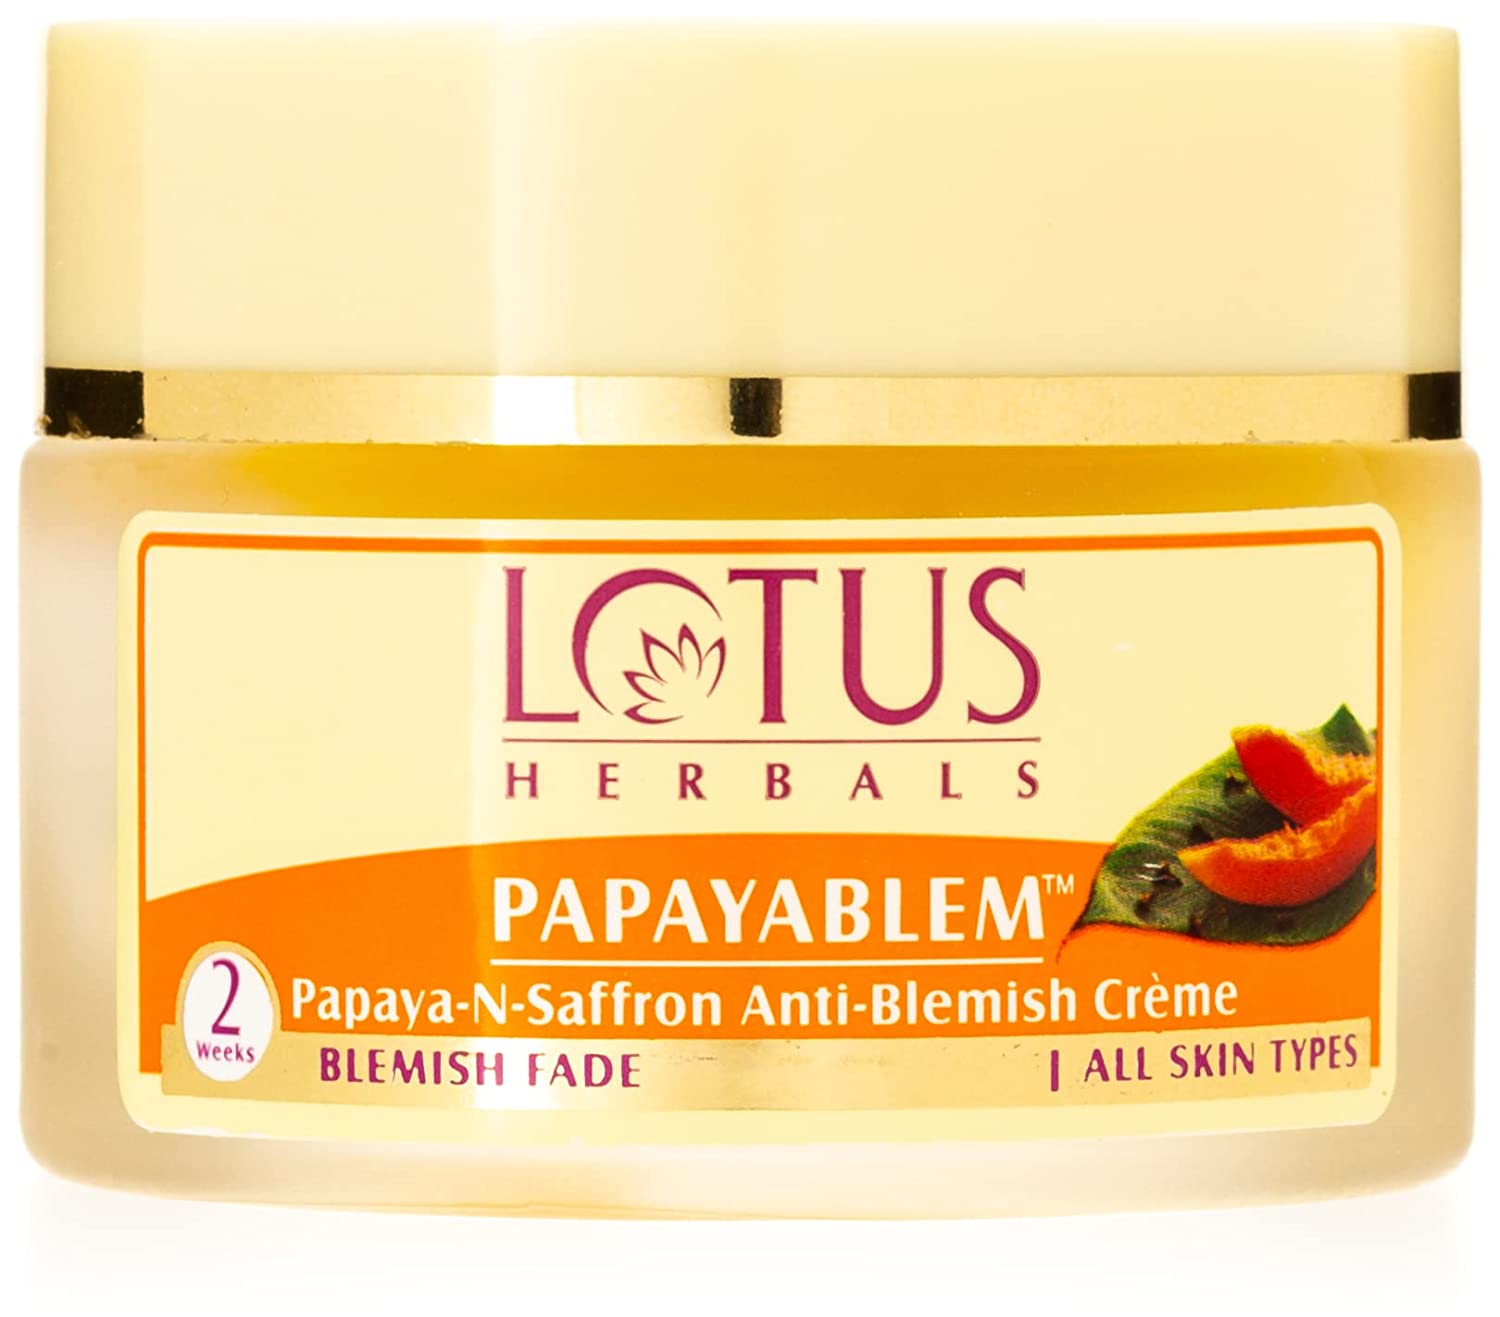 Lotus Herbals Papayablem Papaya-n-Saffron Anti-Blemish Cream, 50g X 2 | JS84